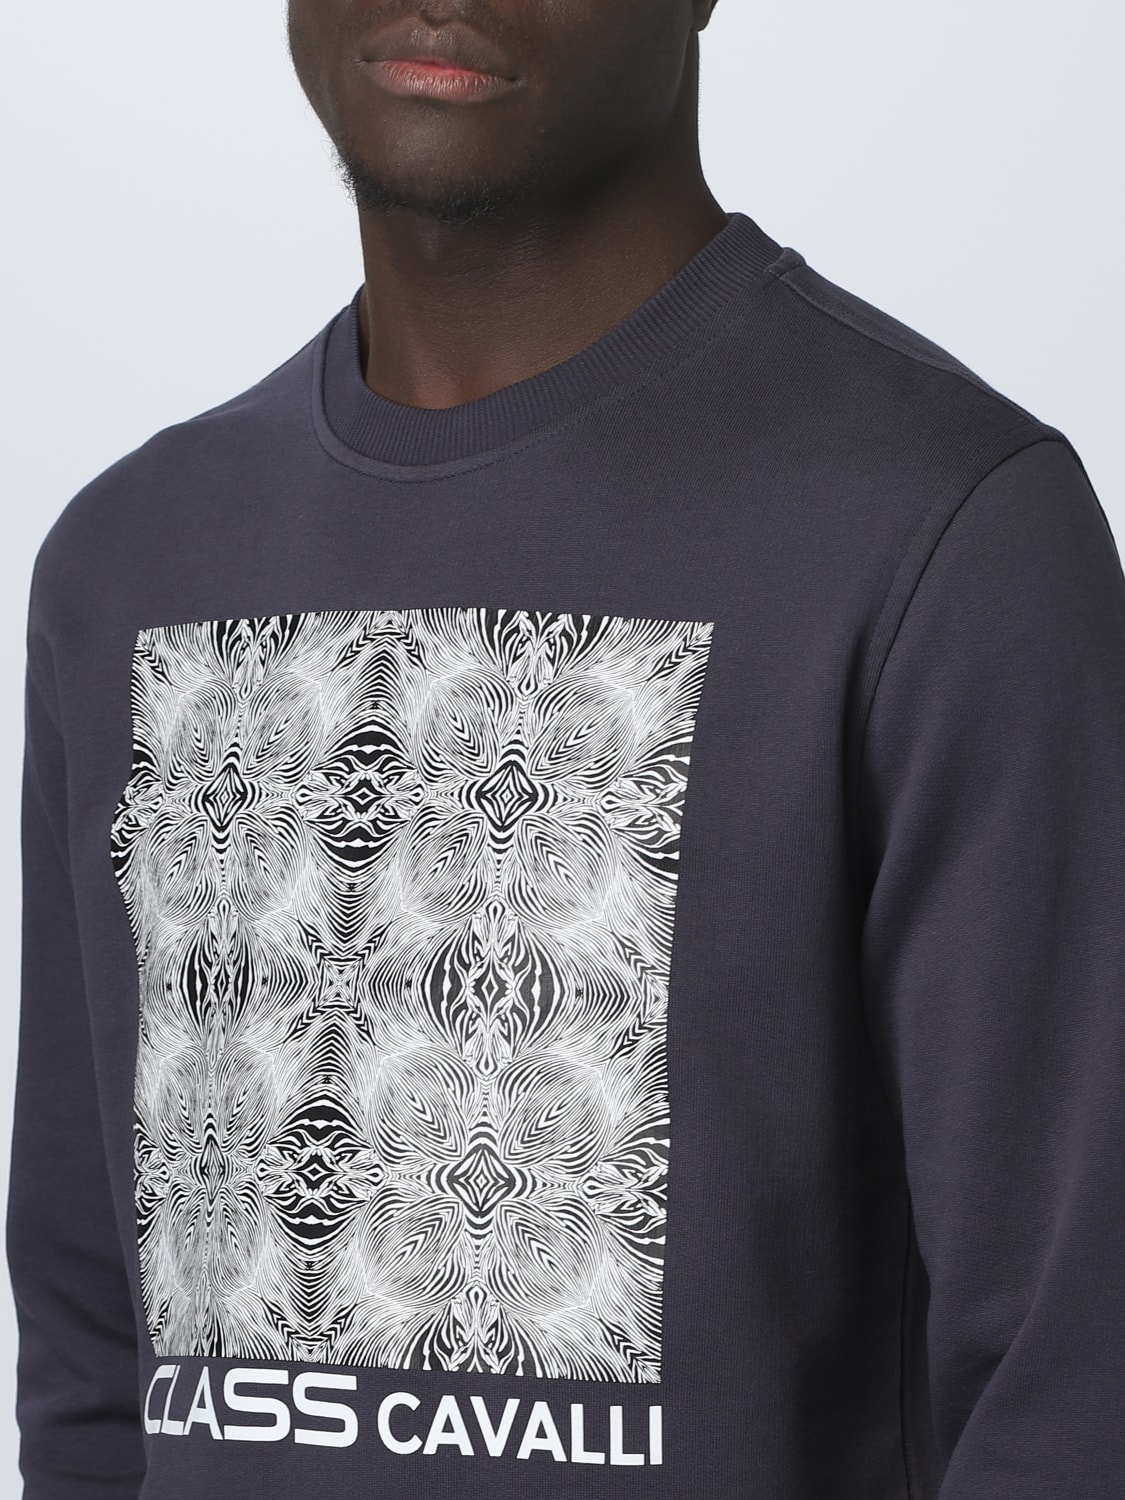 Roberto Cavalli Men's Black Graphic Print Crewneck Cotton T-shirt